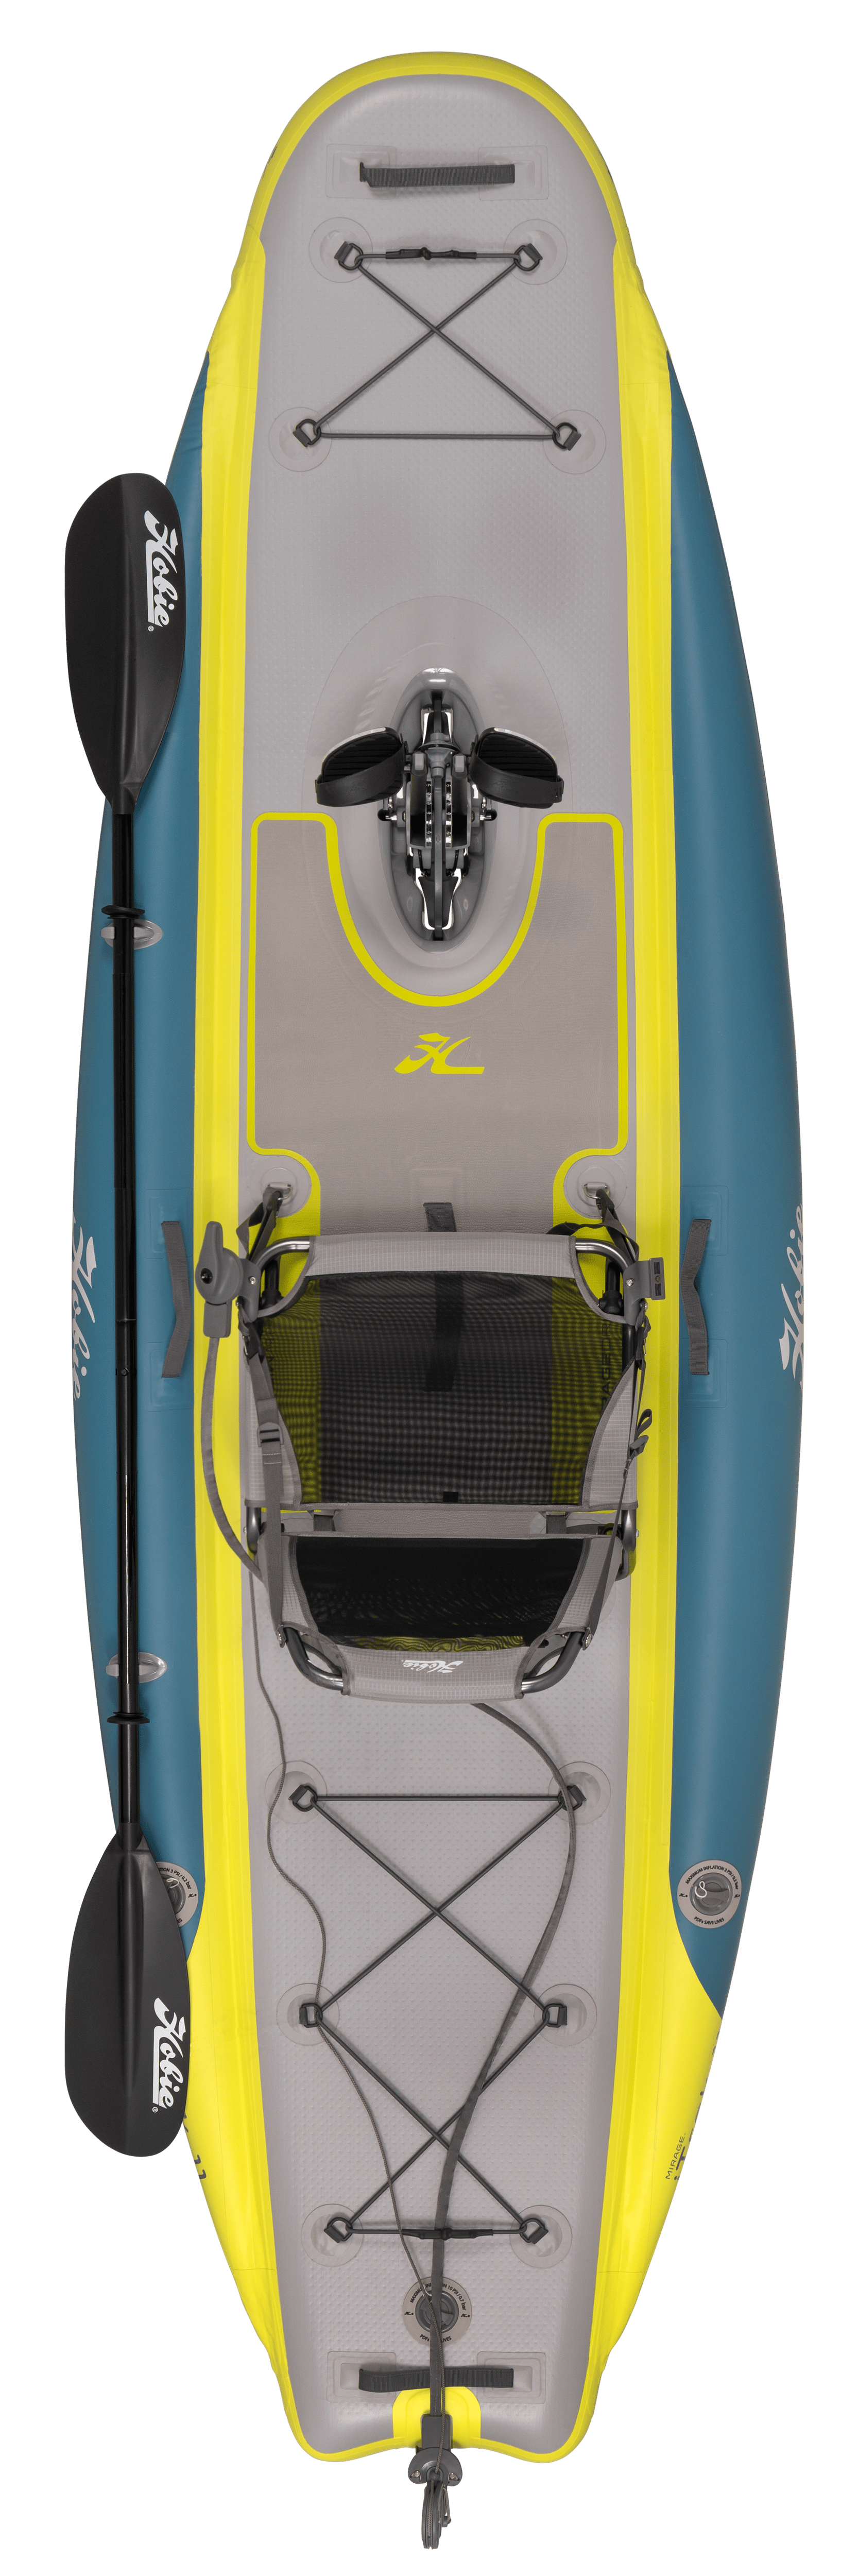 Hobie iTrek 11 inflatable kayak top down deck view showing standard features